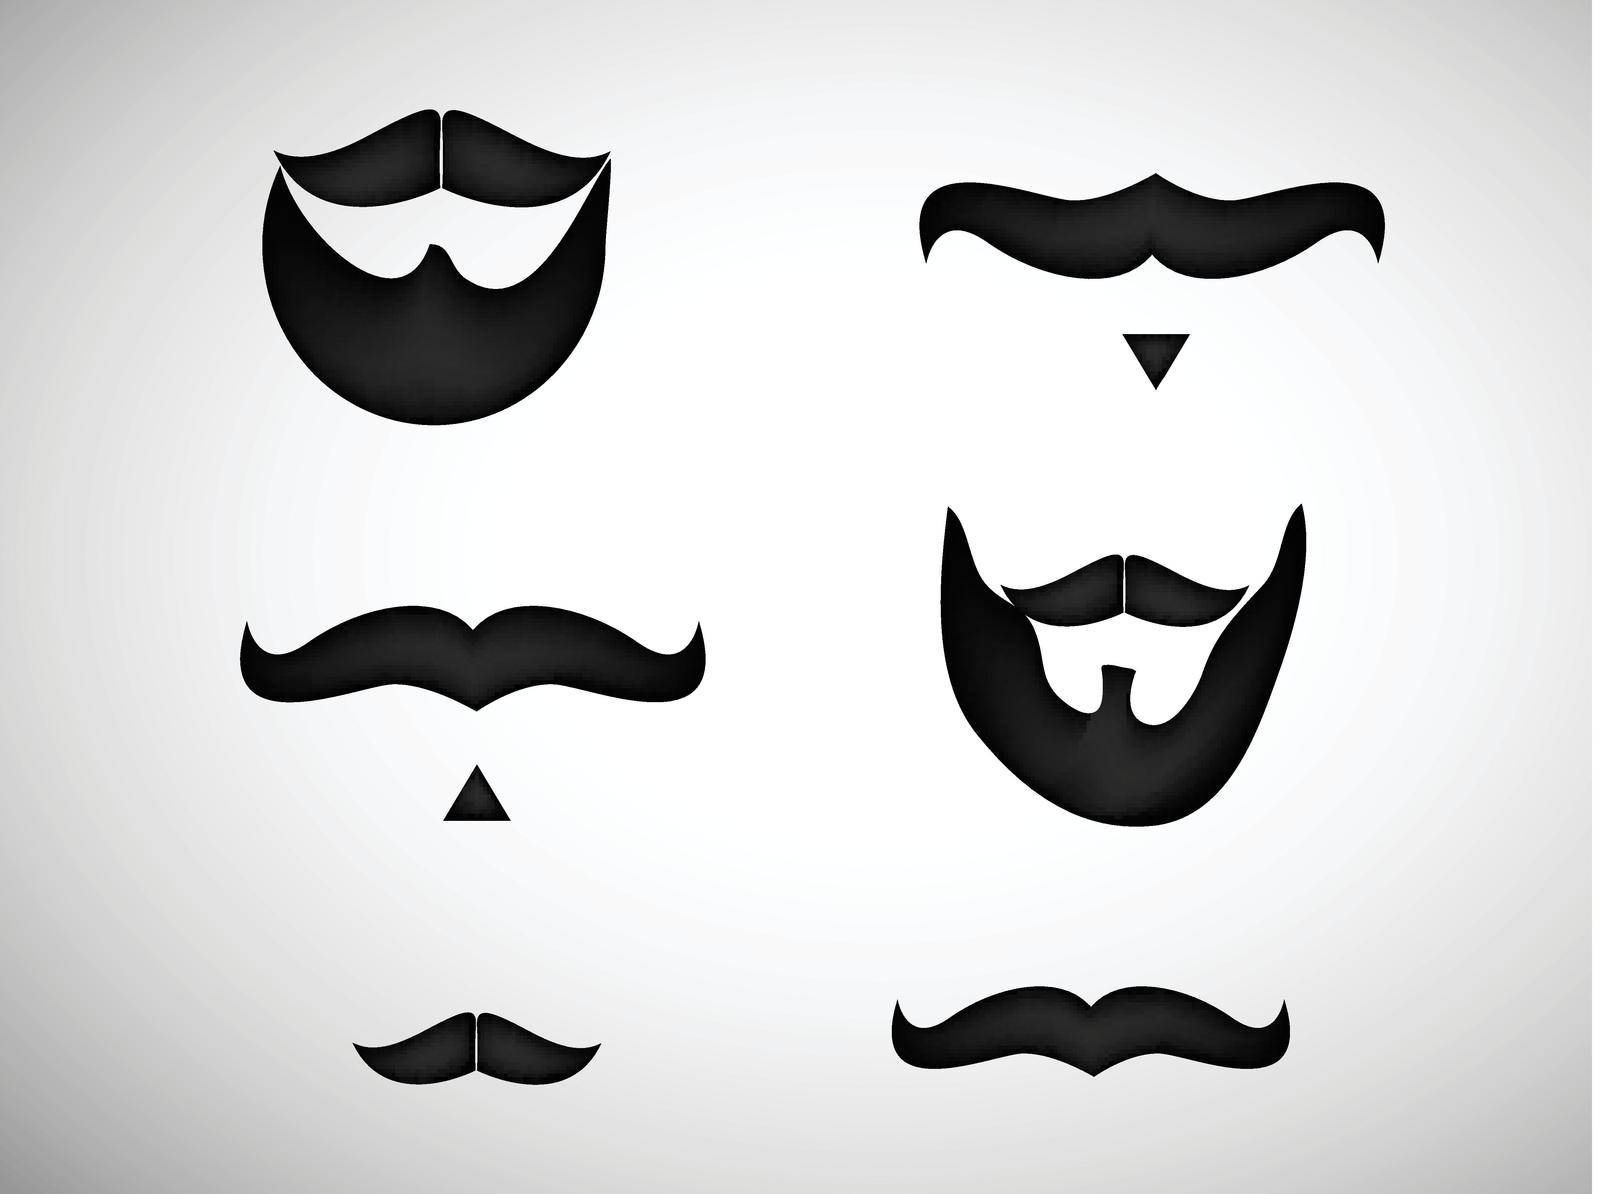 illustration of elements of Movember background